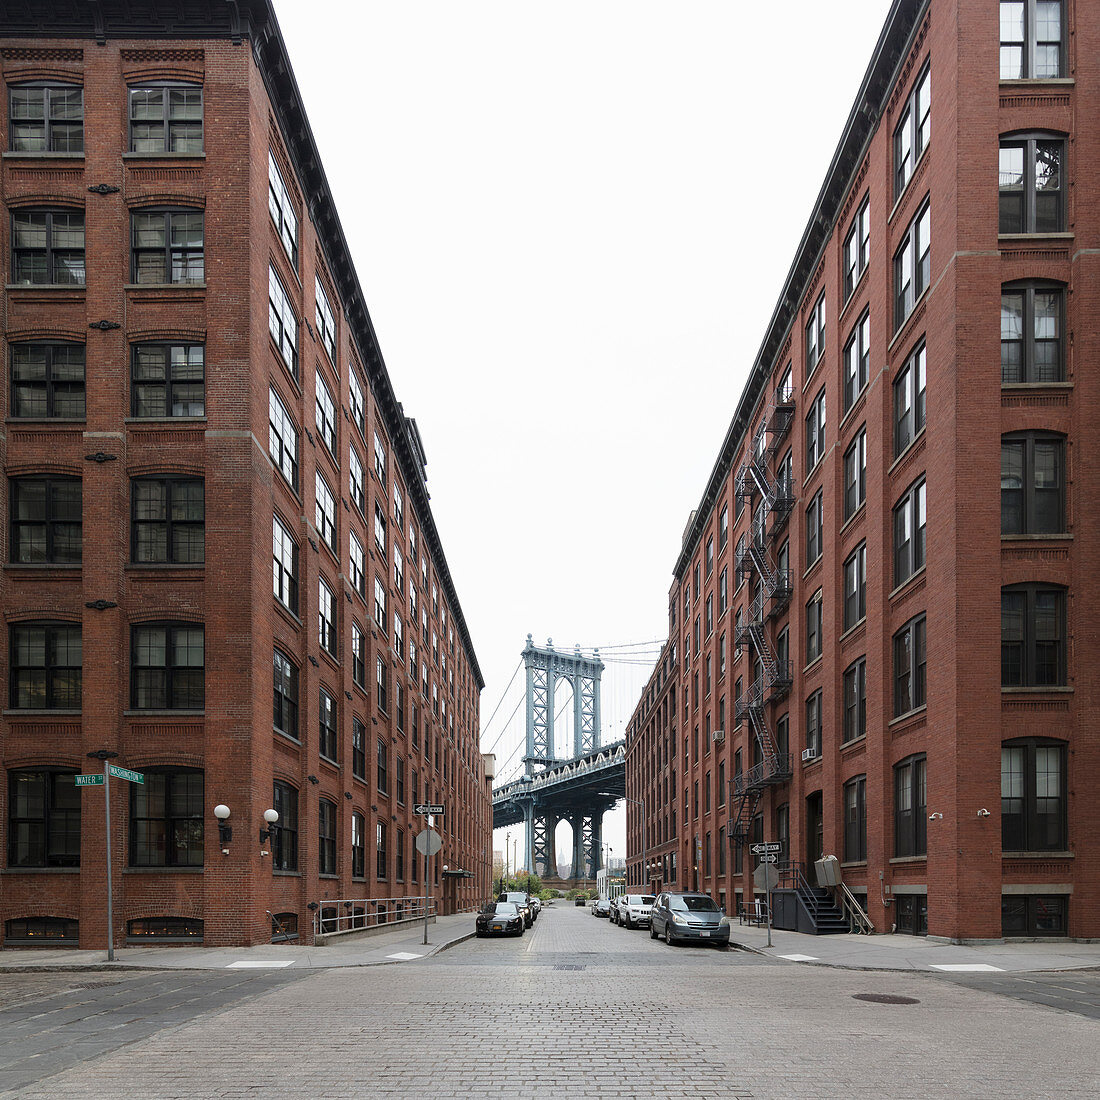 Blick entlang der leeren Straße in Richtung Manhattan Bridge, New York City, USA während der Corona-Virus-Krise